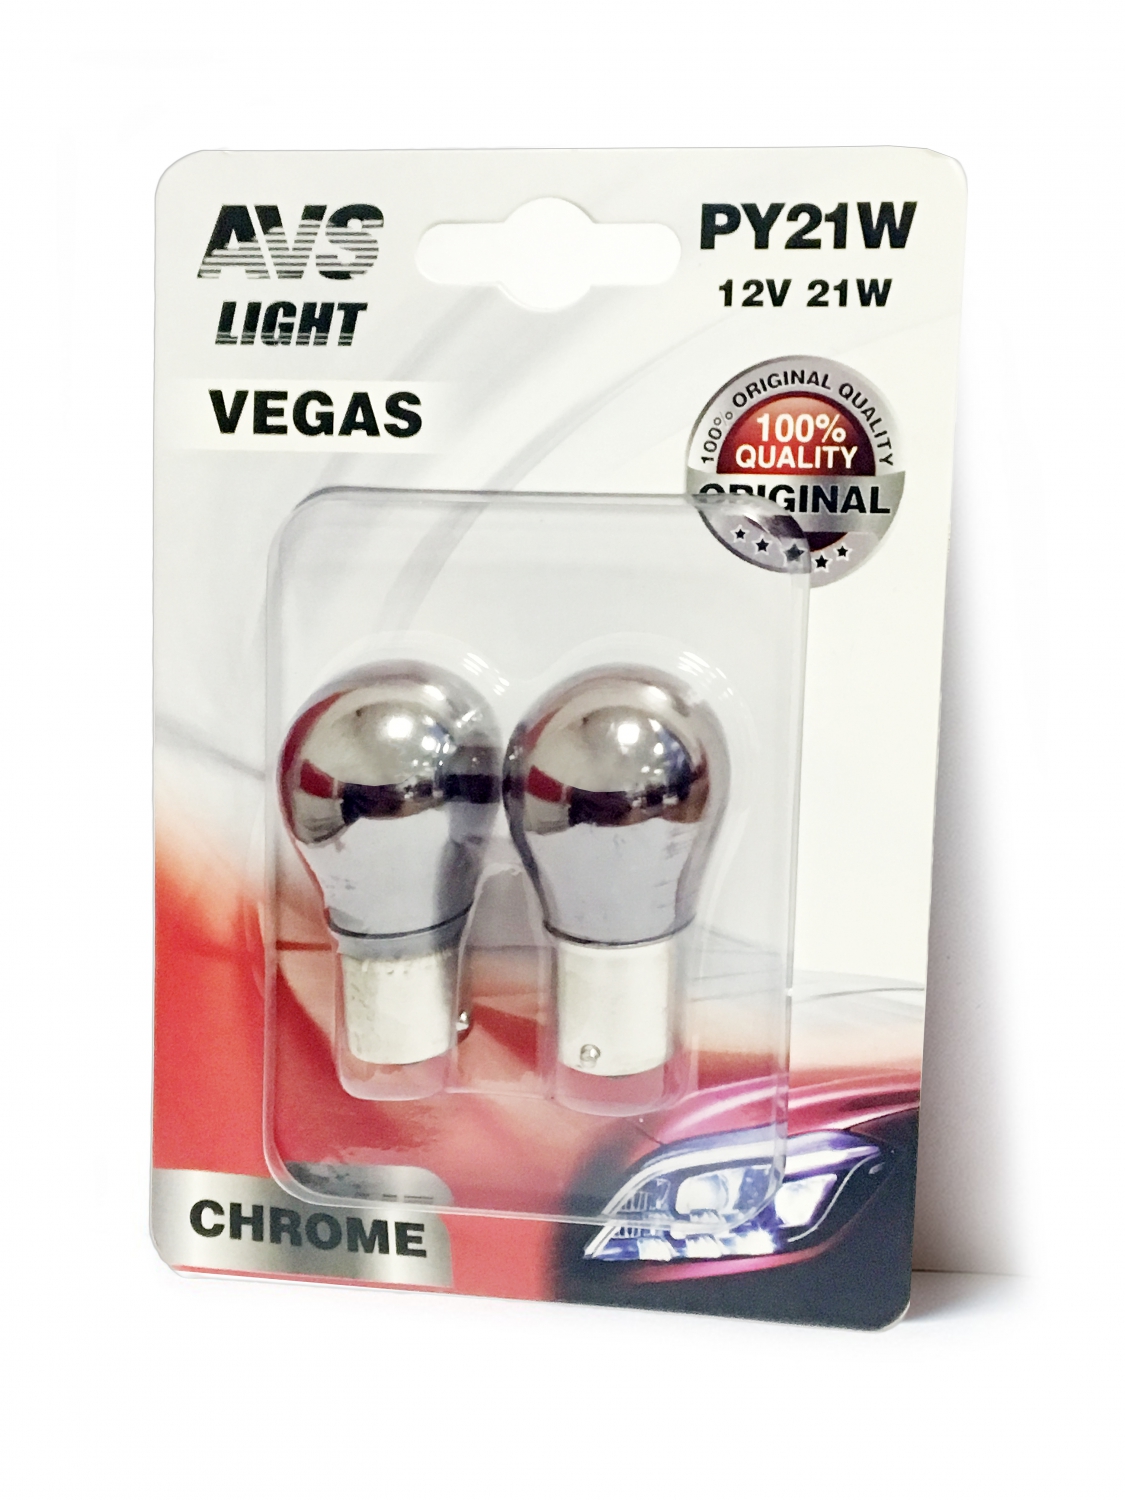 Лампа AVS Vegas CHROME в блистере 12V. PY21W(BAU15S) orange смещ. цоколь - 2 шт.